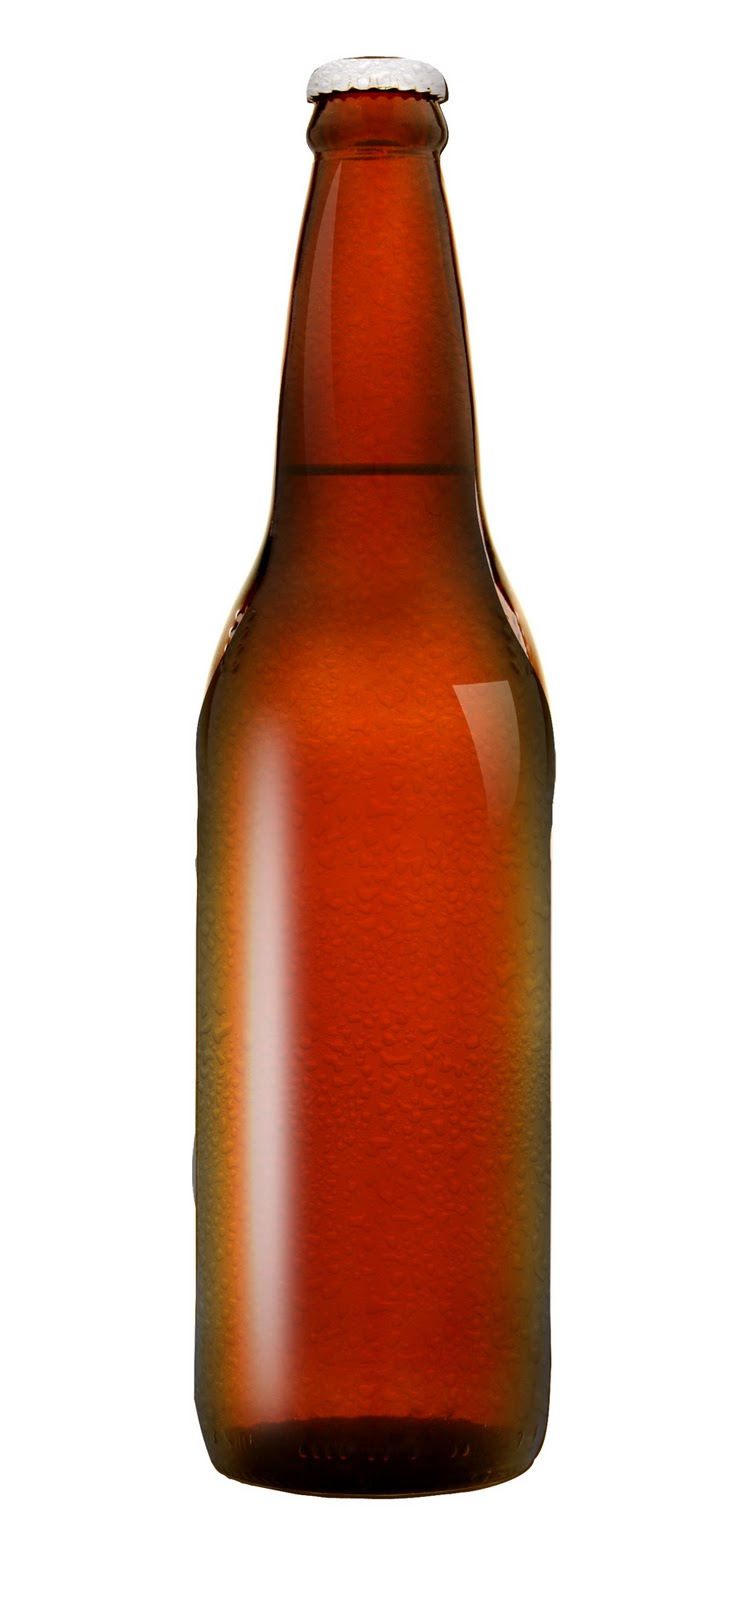 Beer Bottle Clipart - Beer Bottle Clipart